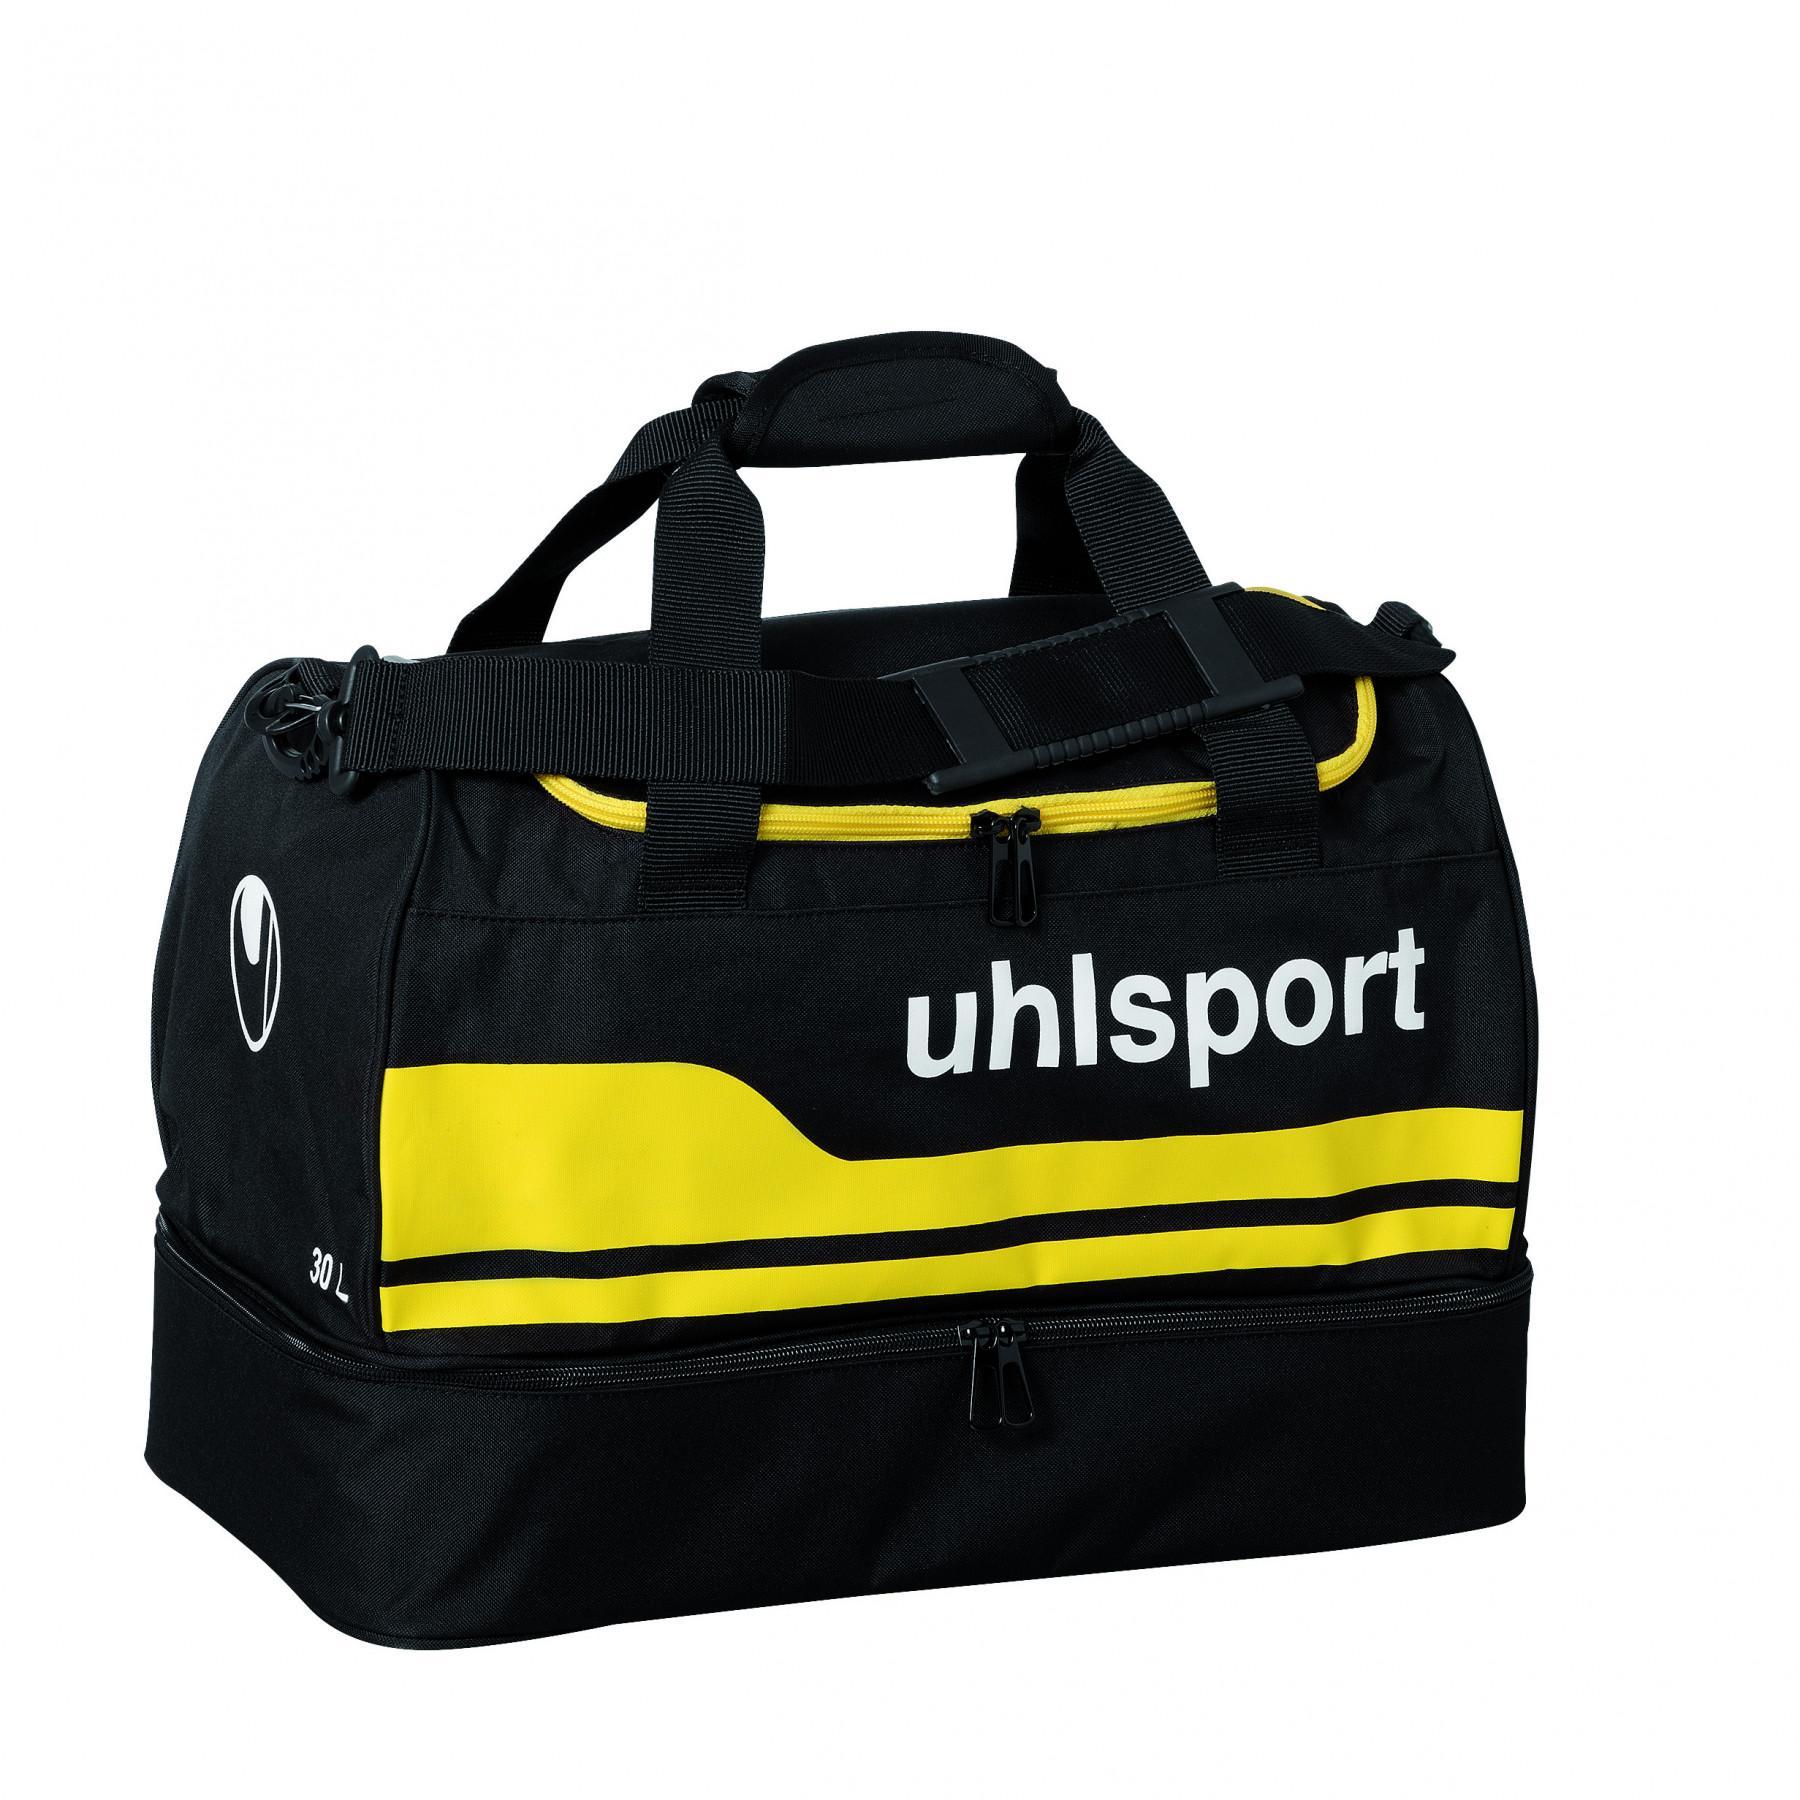 Borsa Uhlsport Basic Line 2.0 Playersbags 75L